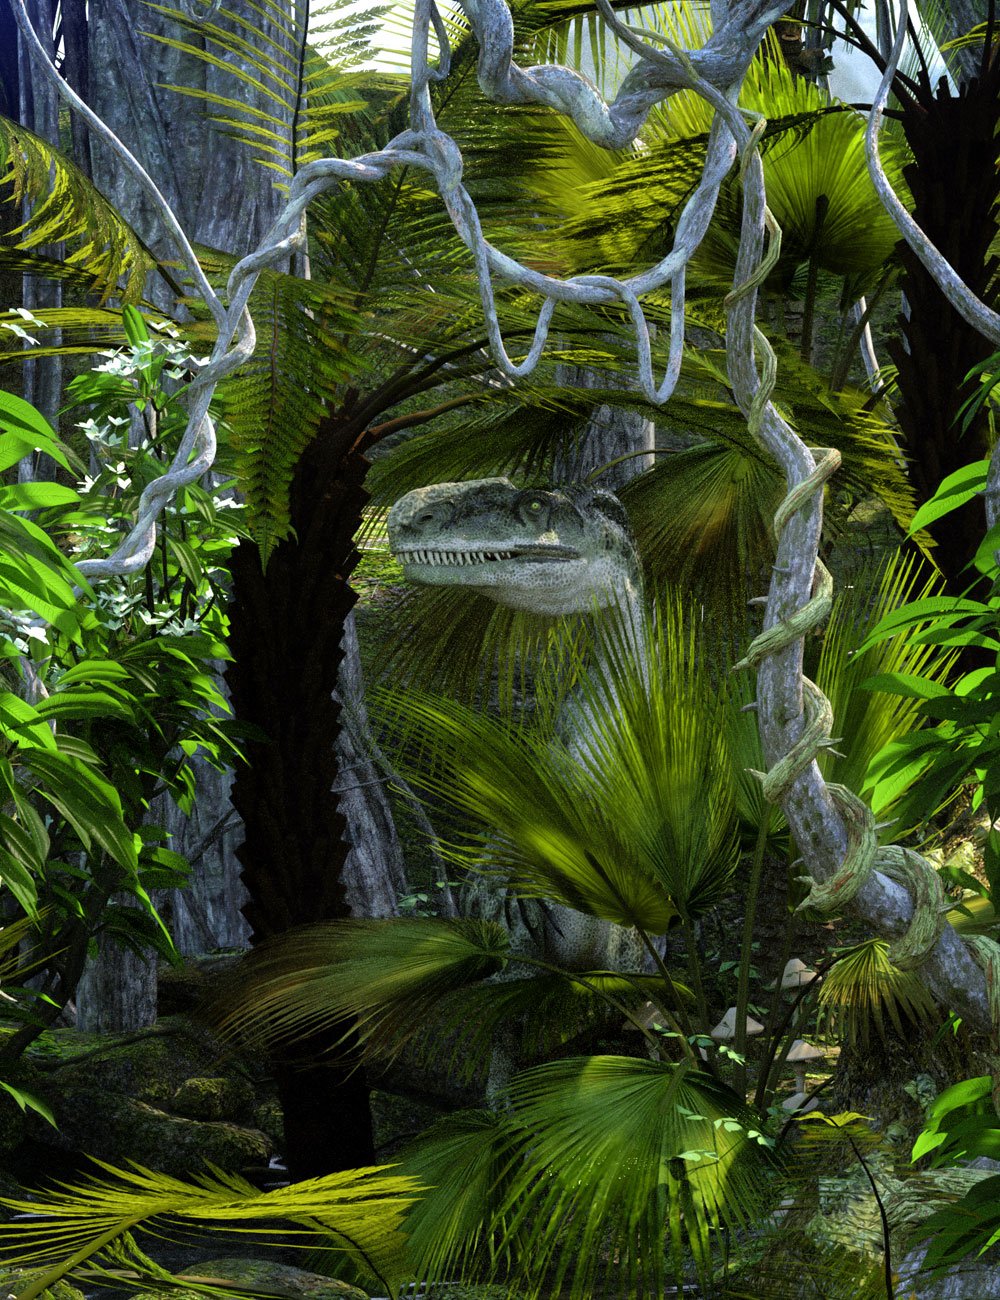 Tropical Plants for Daz Studio Vol 2 by: MartinJFrost, 3D Models by Daz 3D